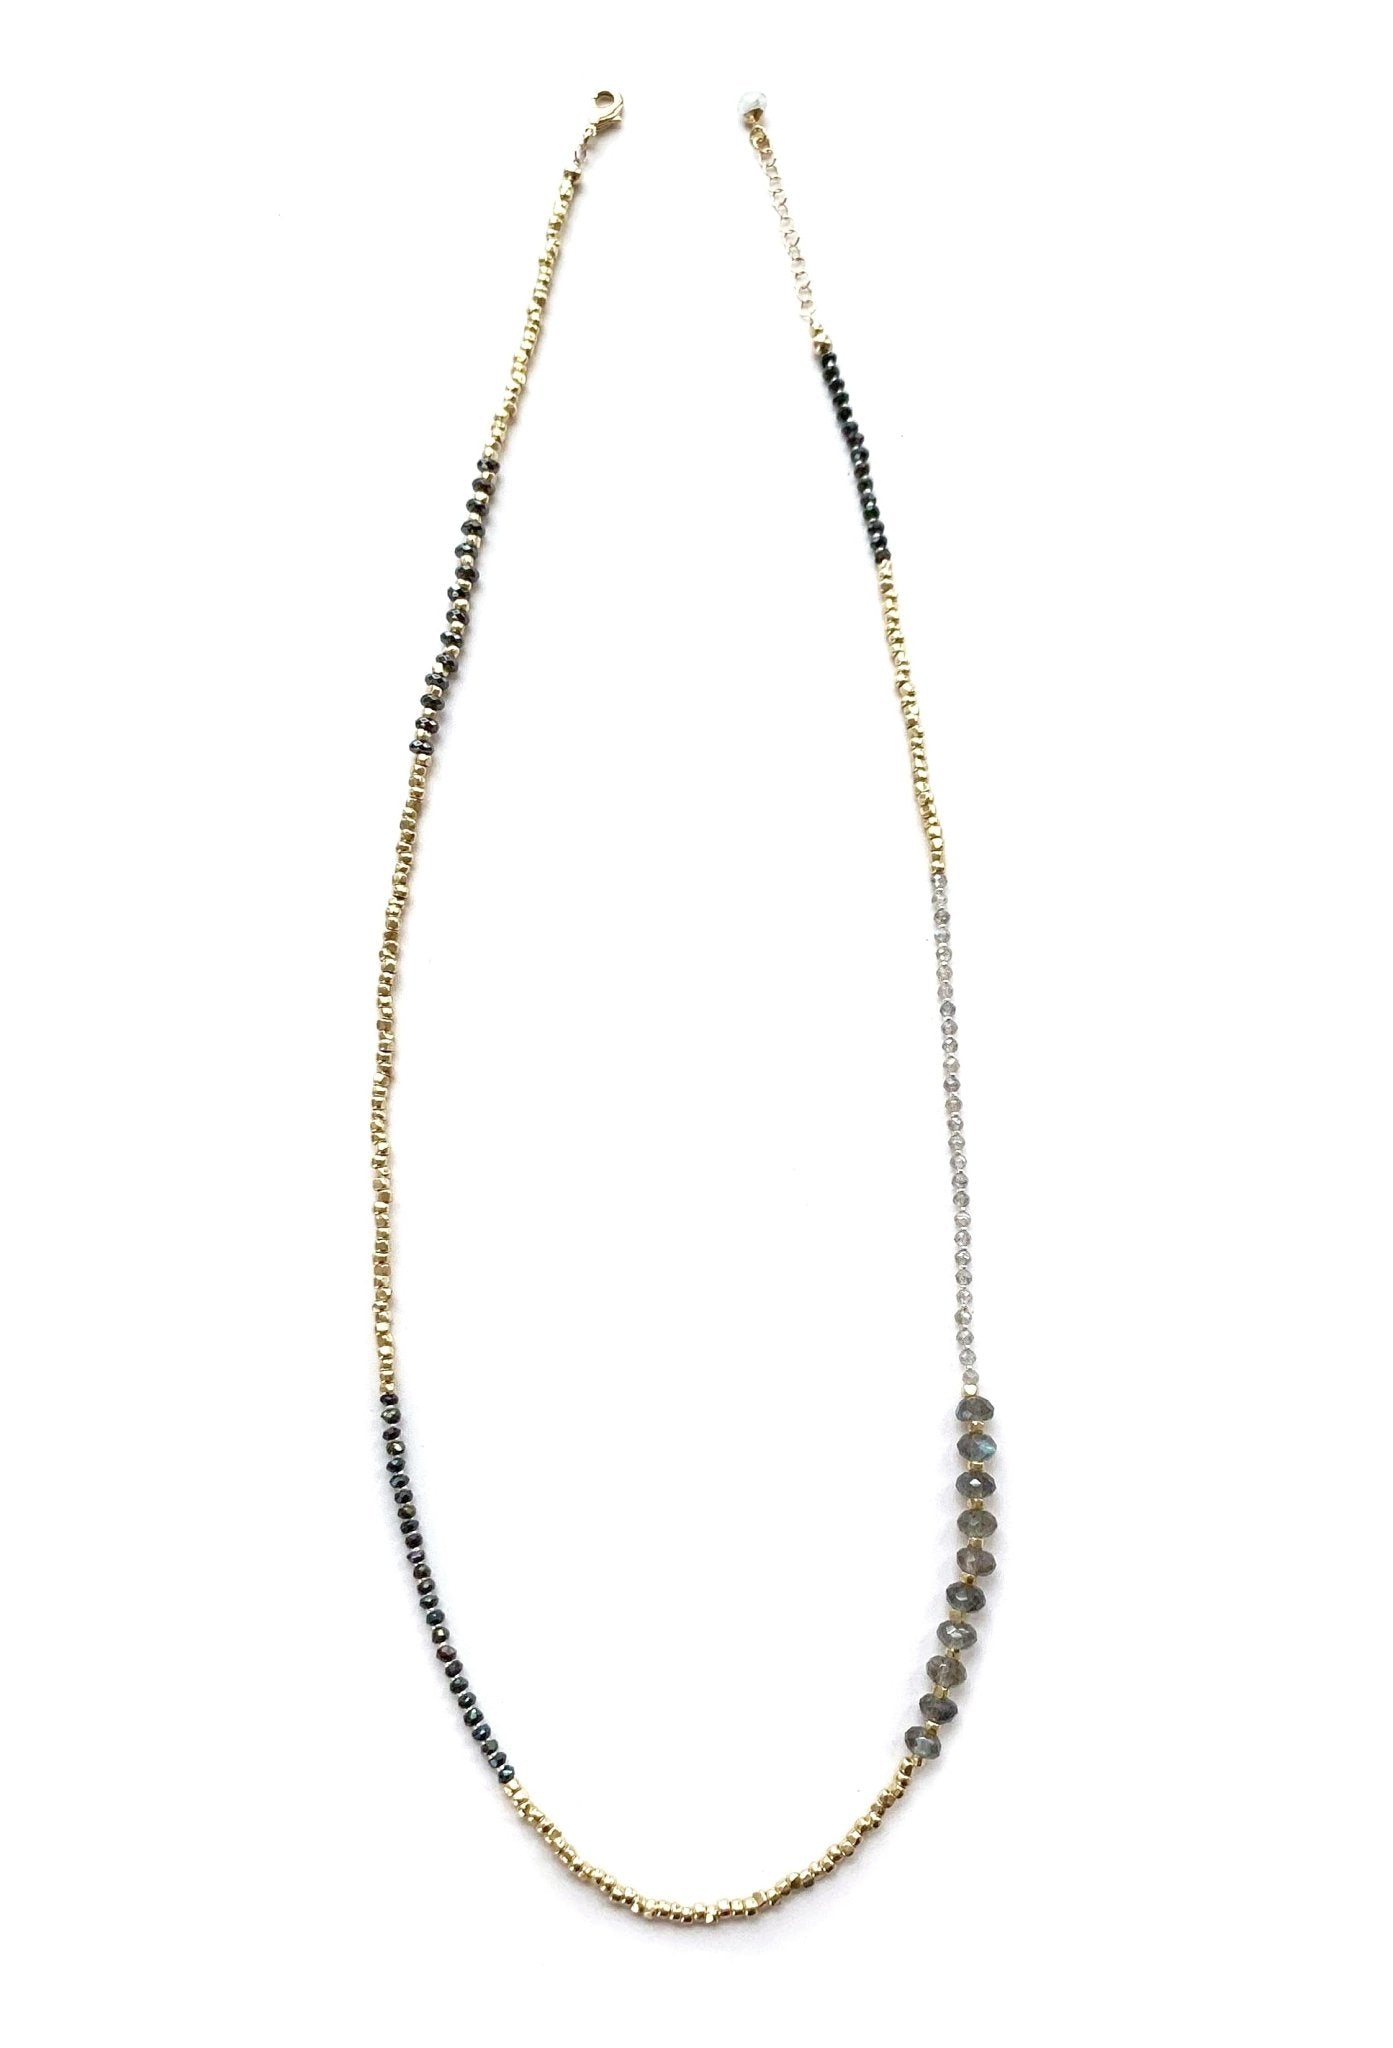 Mixit Gold & Black Gemstone Wrap Bracelet Necklace - LJFjewelry